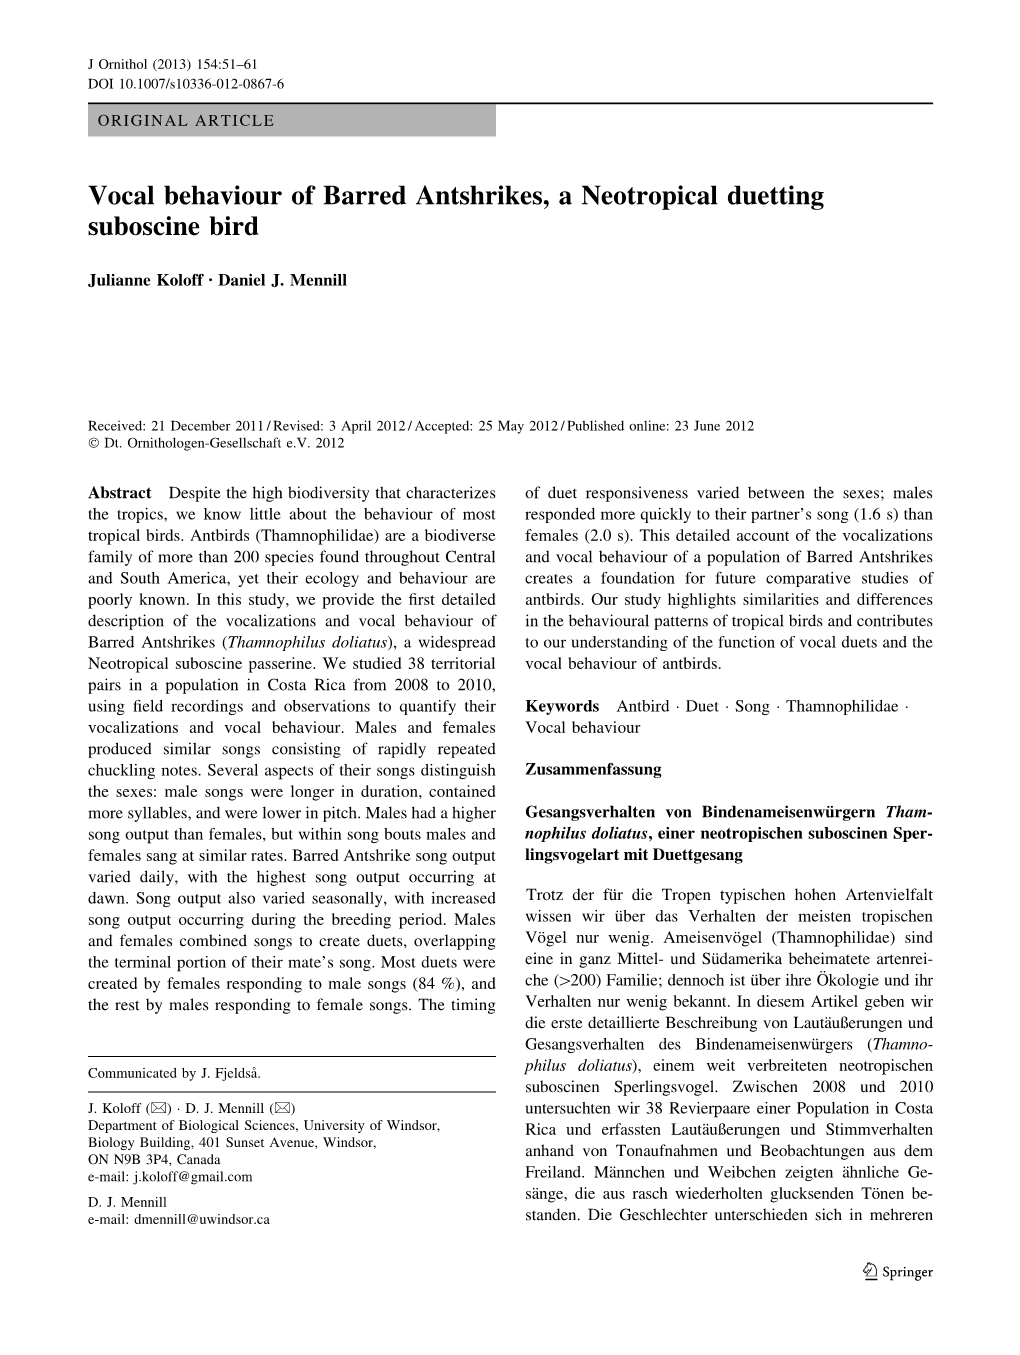 Vocal Behaviour of Barred Antshrikes, a Neotropical Duetting Suboscine Bird